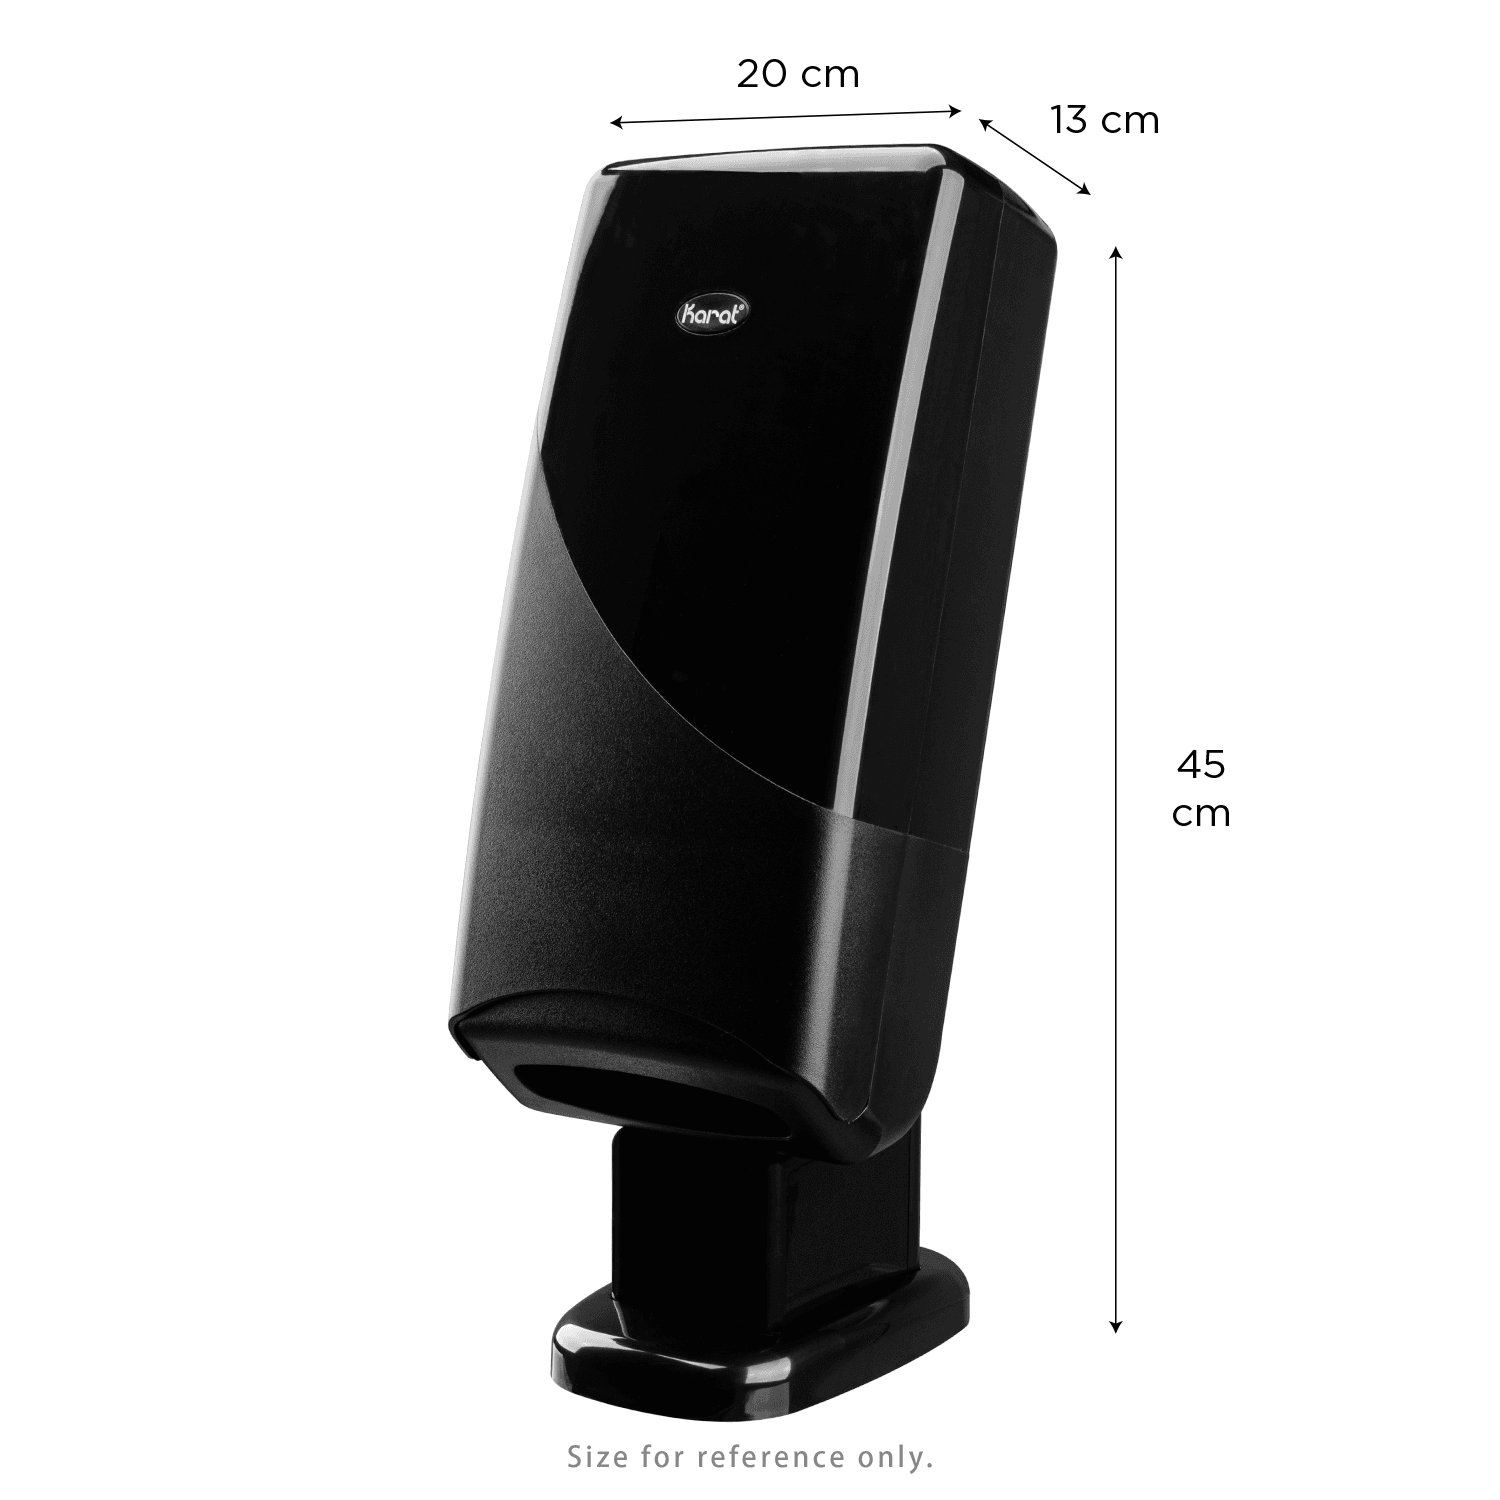 Karat Interfold Dispenser for Dispense Nap, Stand/Tabletop, Black - 1 unit